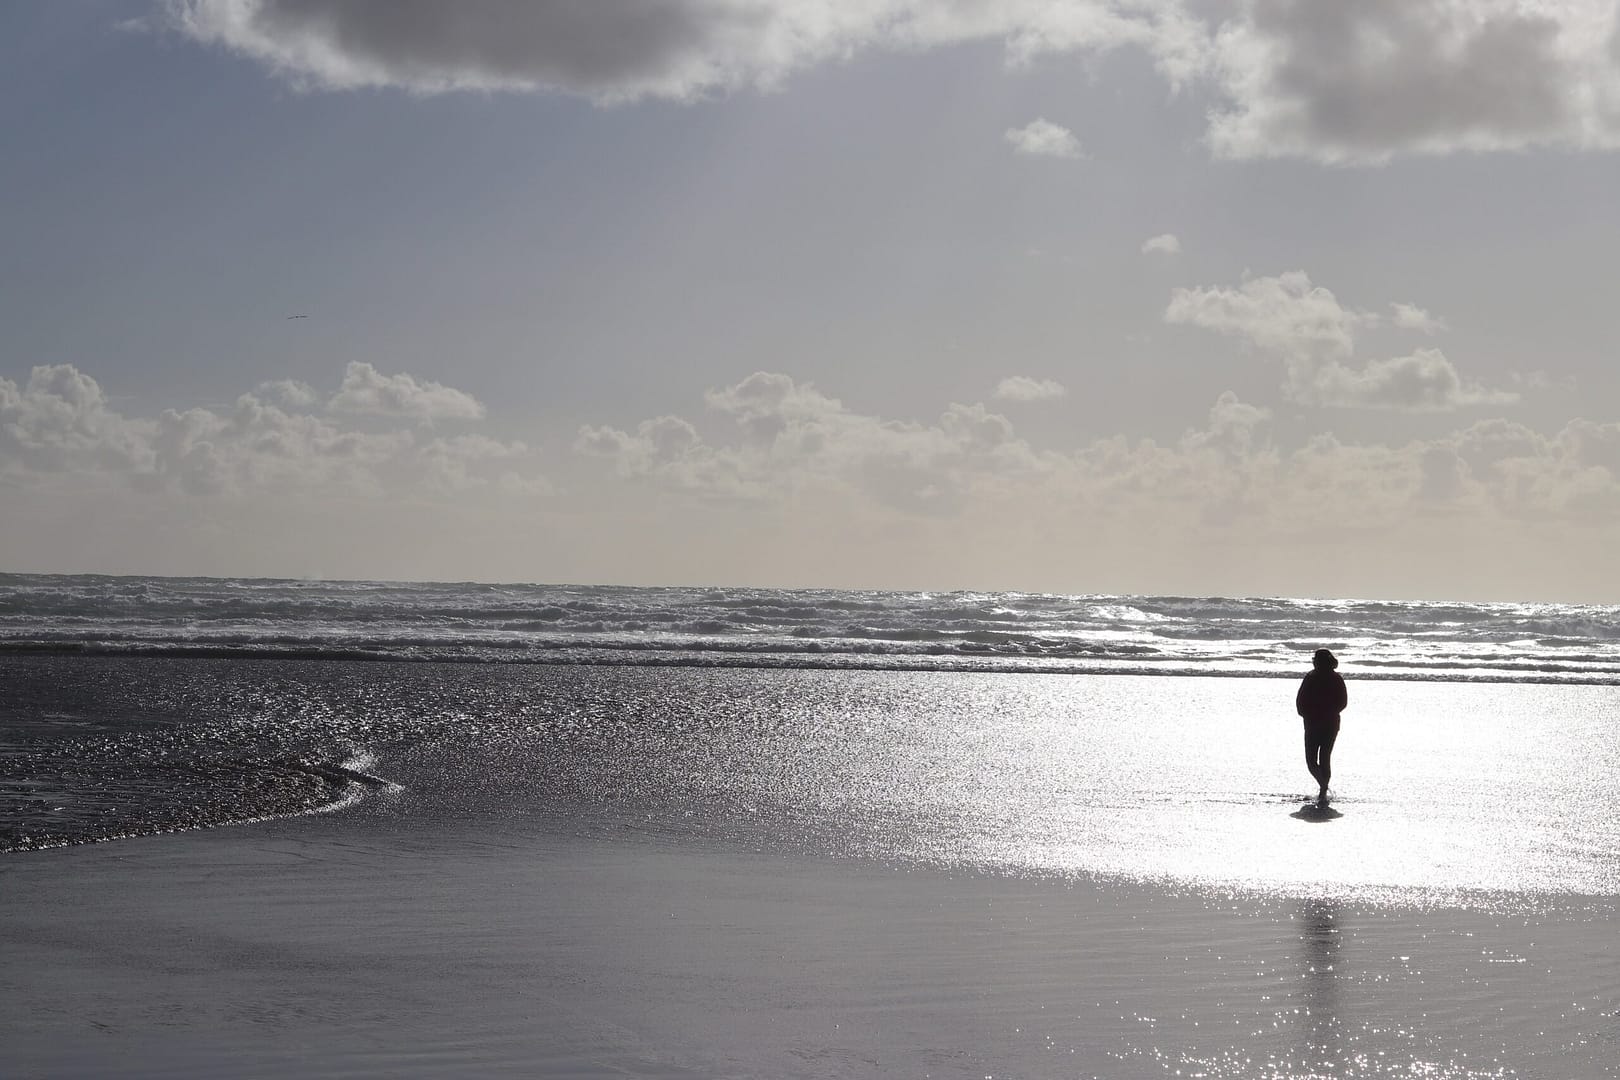 Megan standing on beach of Pacific ocean